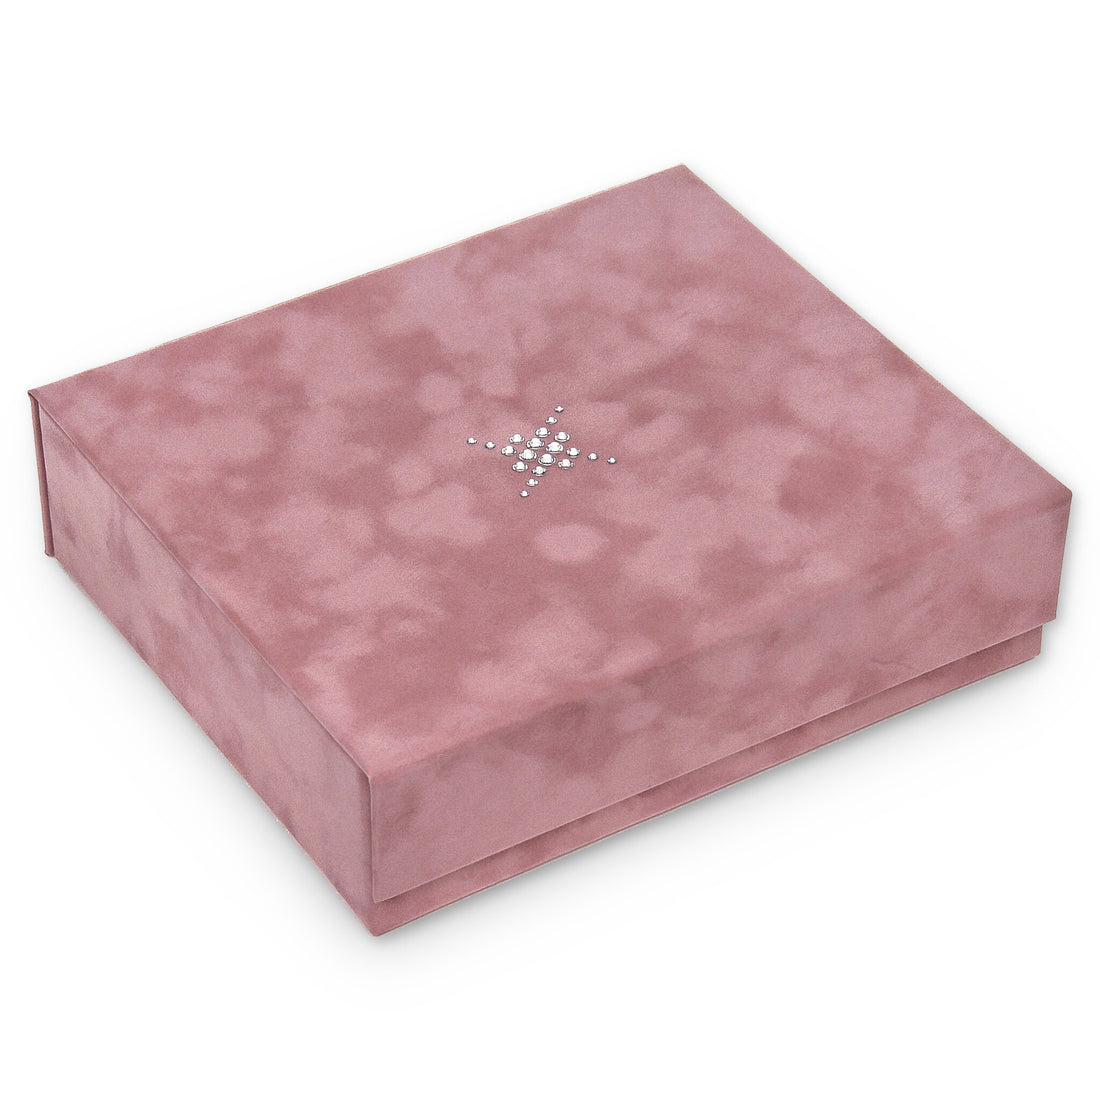 Schmuckbox Nora crystalo / alt rosé – Manufaktur SACHER 1846 | Offizieller  Store